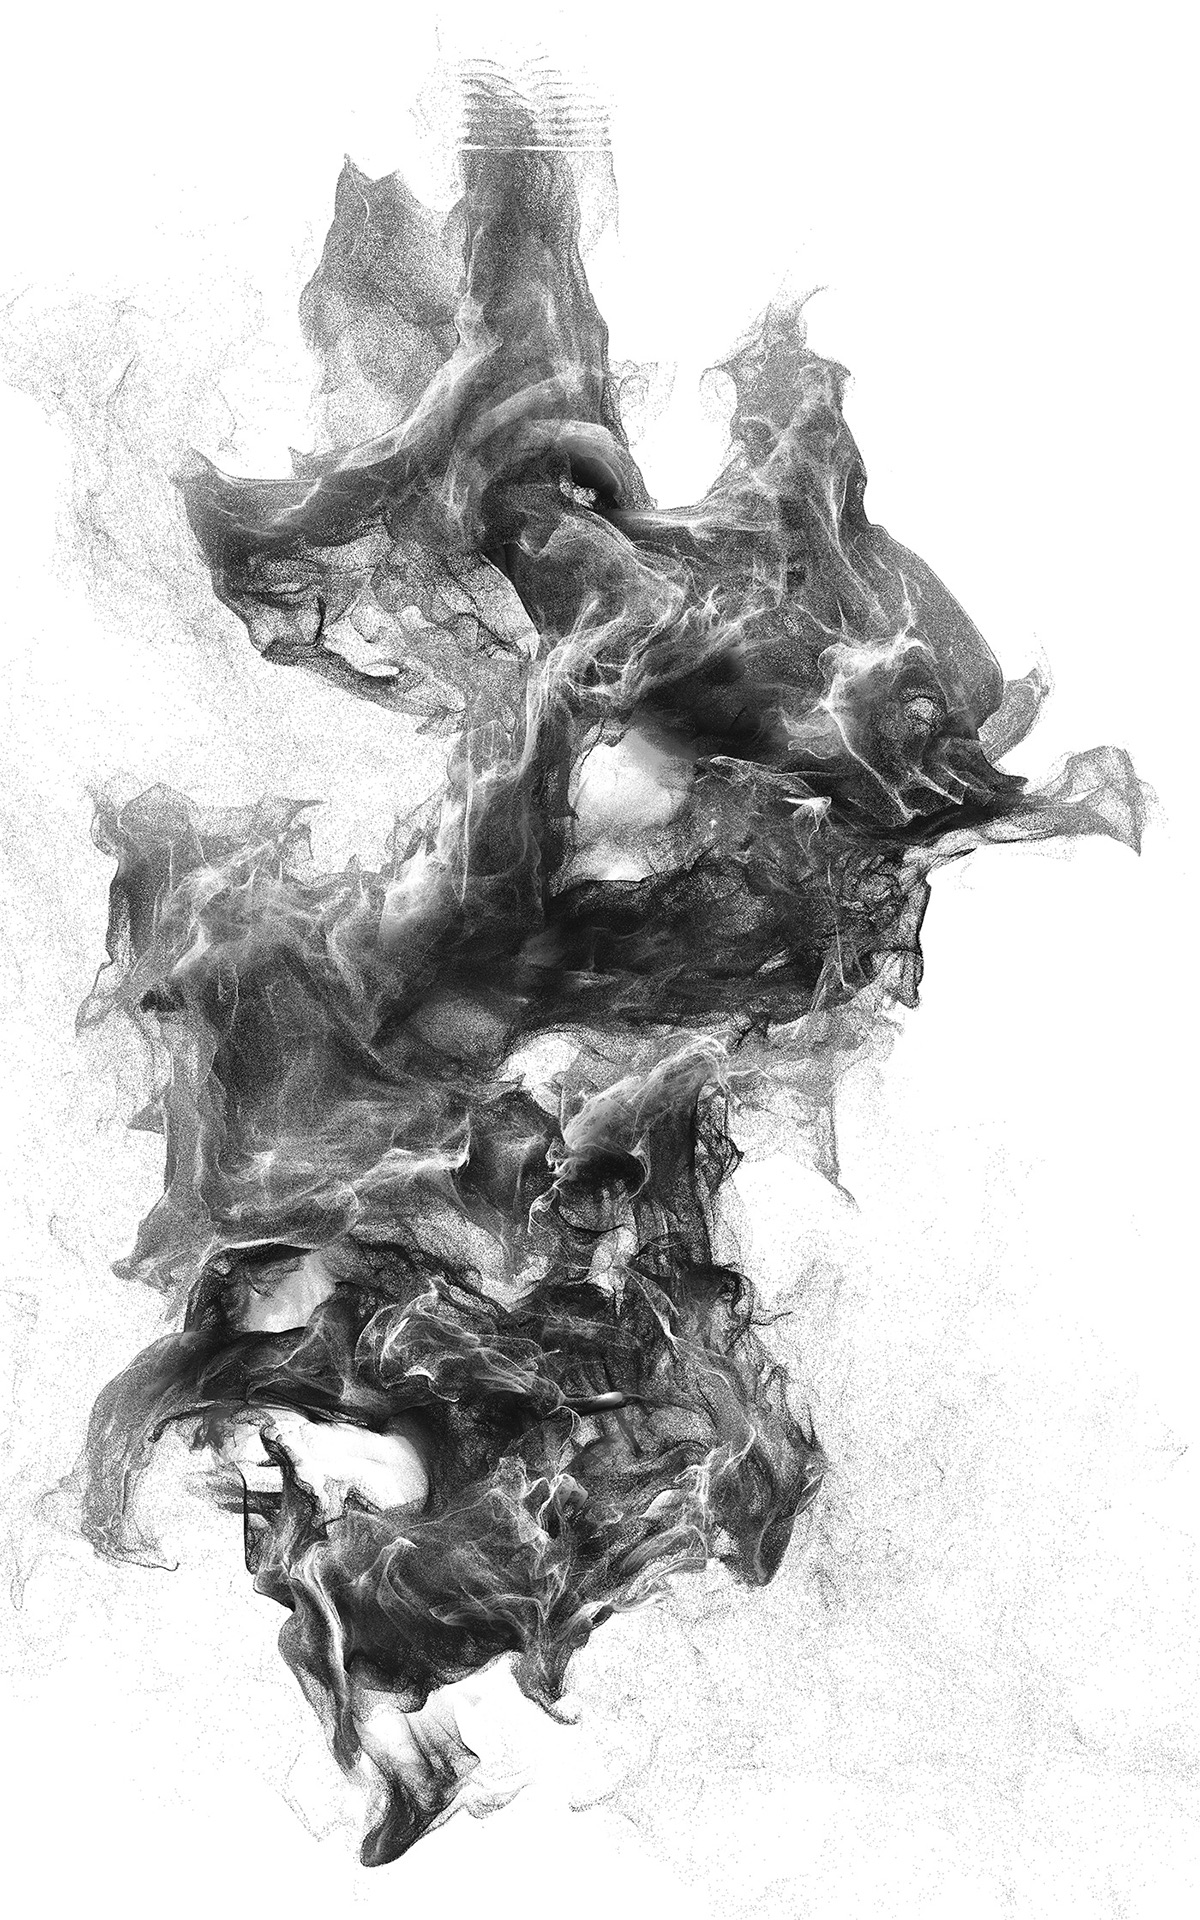 teun van der zalm salmonick atelier particles art digital abstract points black White